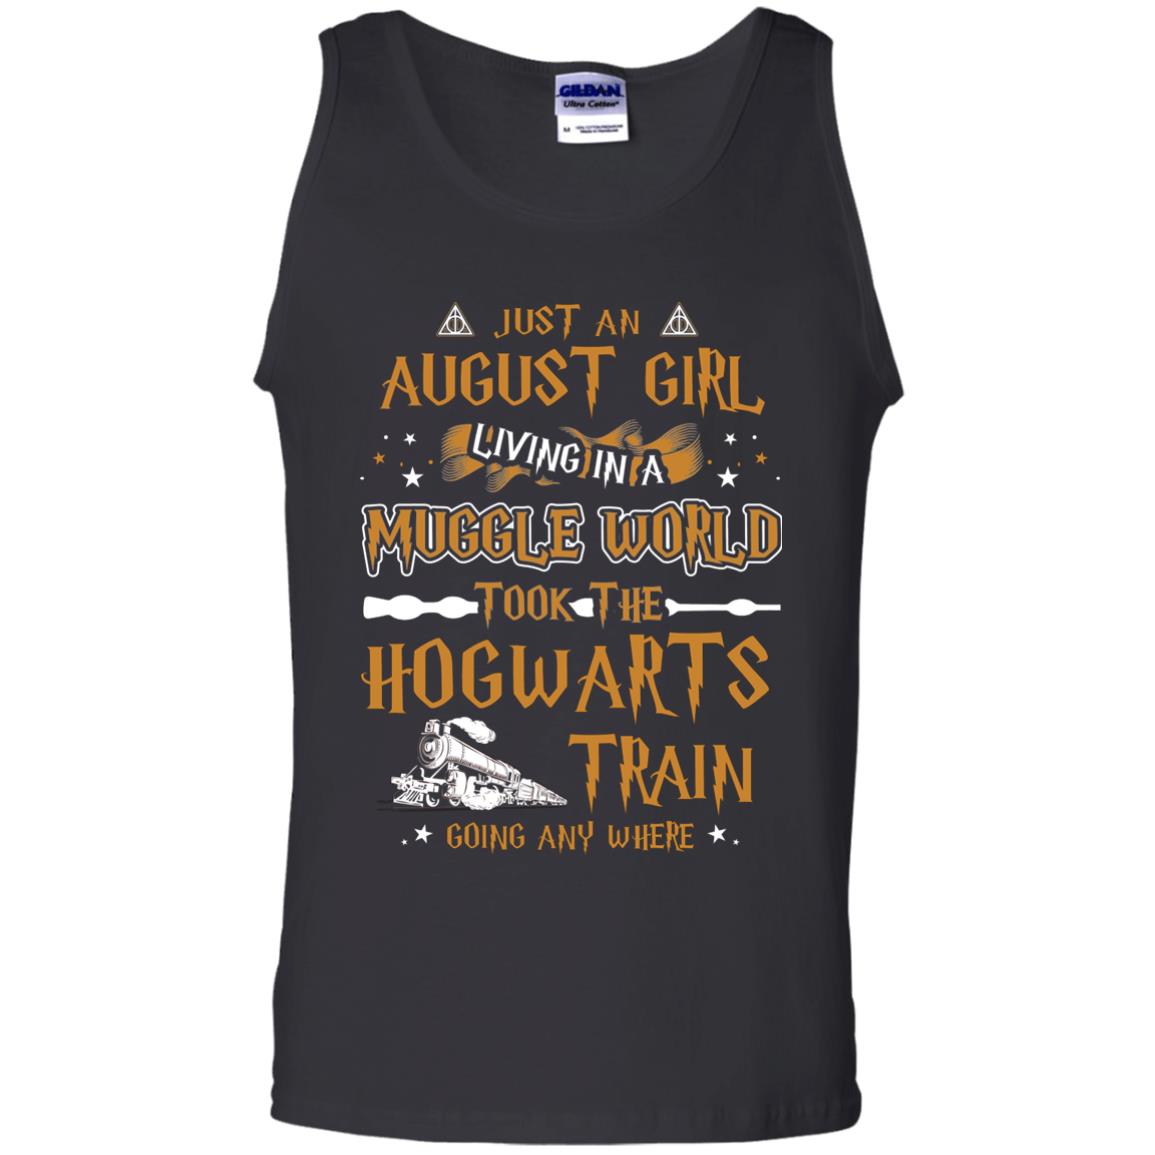 Just An August Girl Living In A Muggle World Took The Hogwarts Train Going Any WhereG220 Gildan 100% Cotton Tank Top